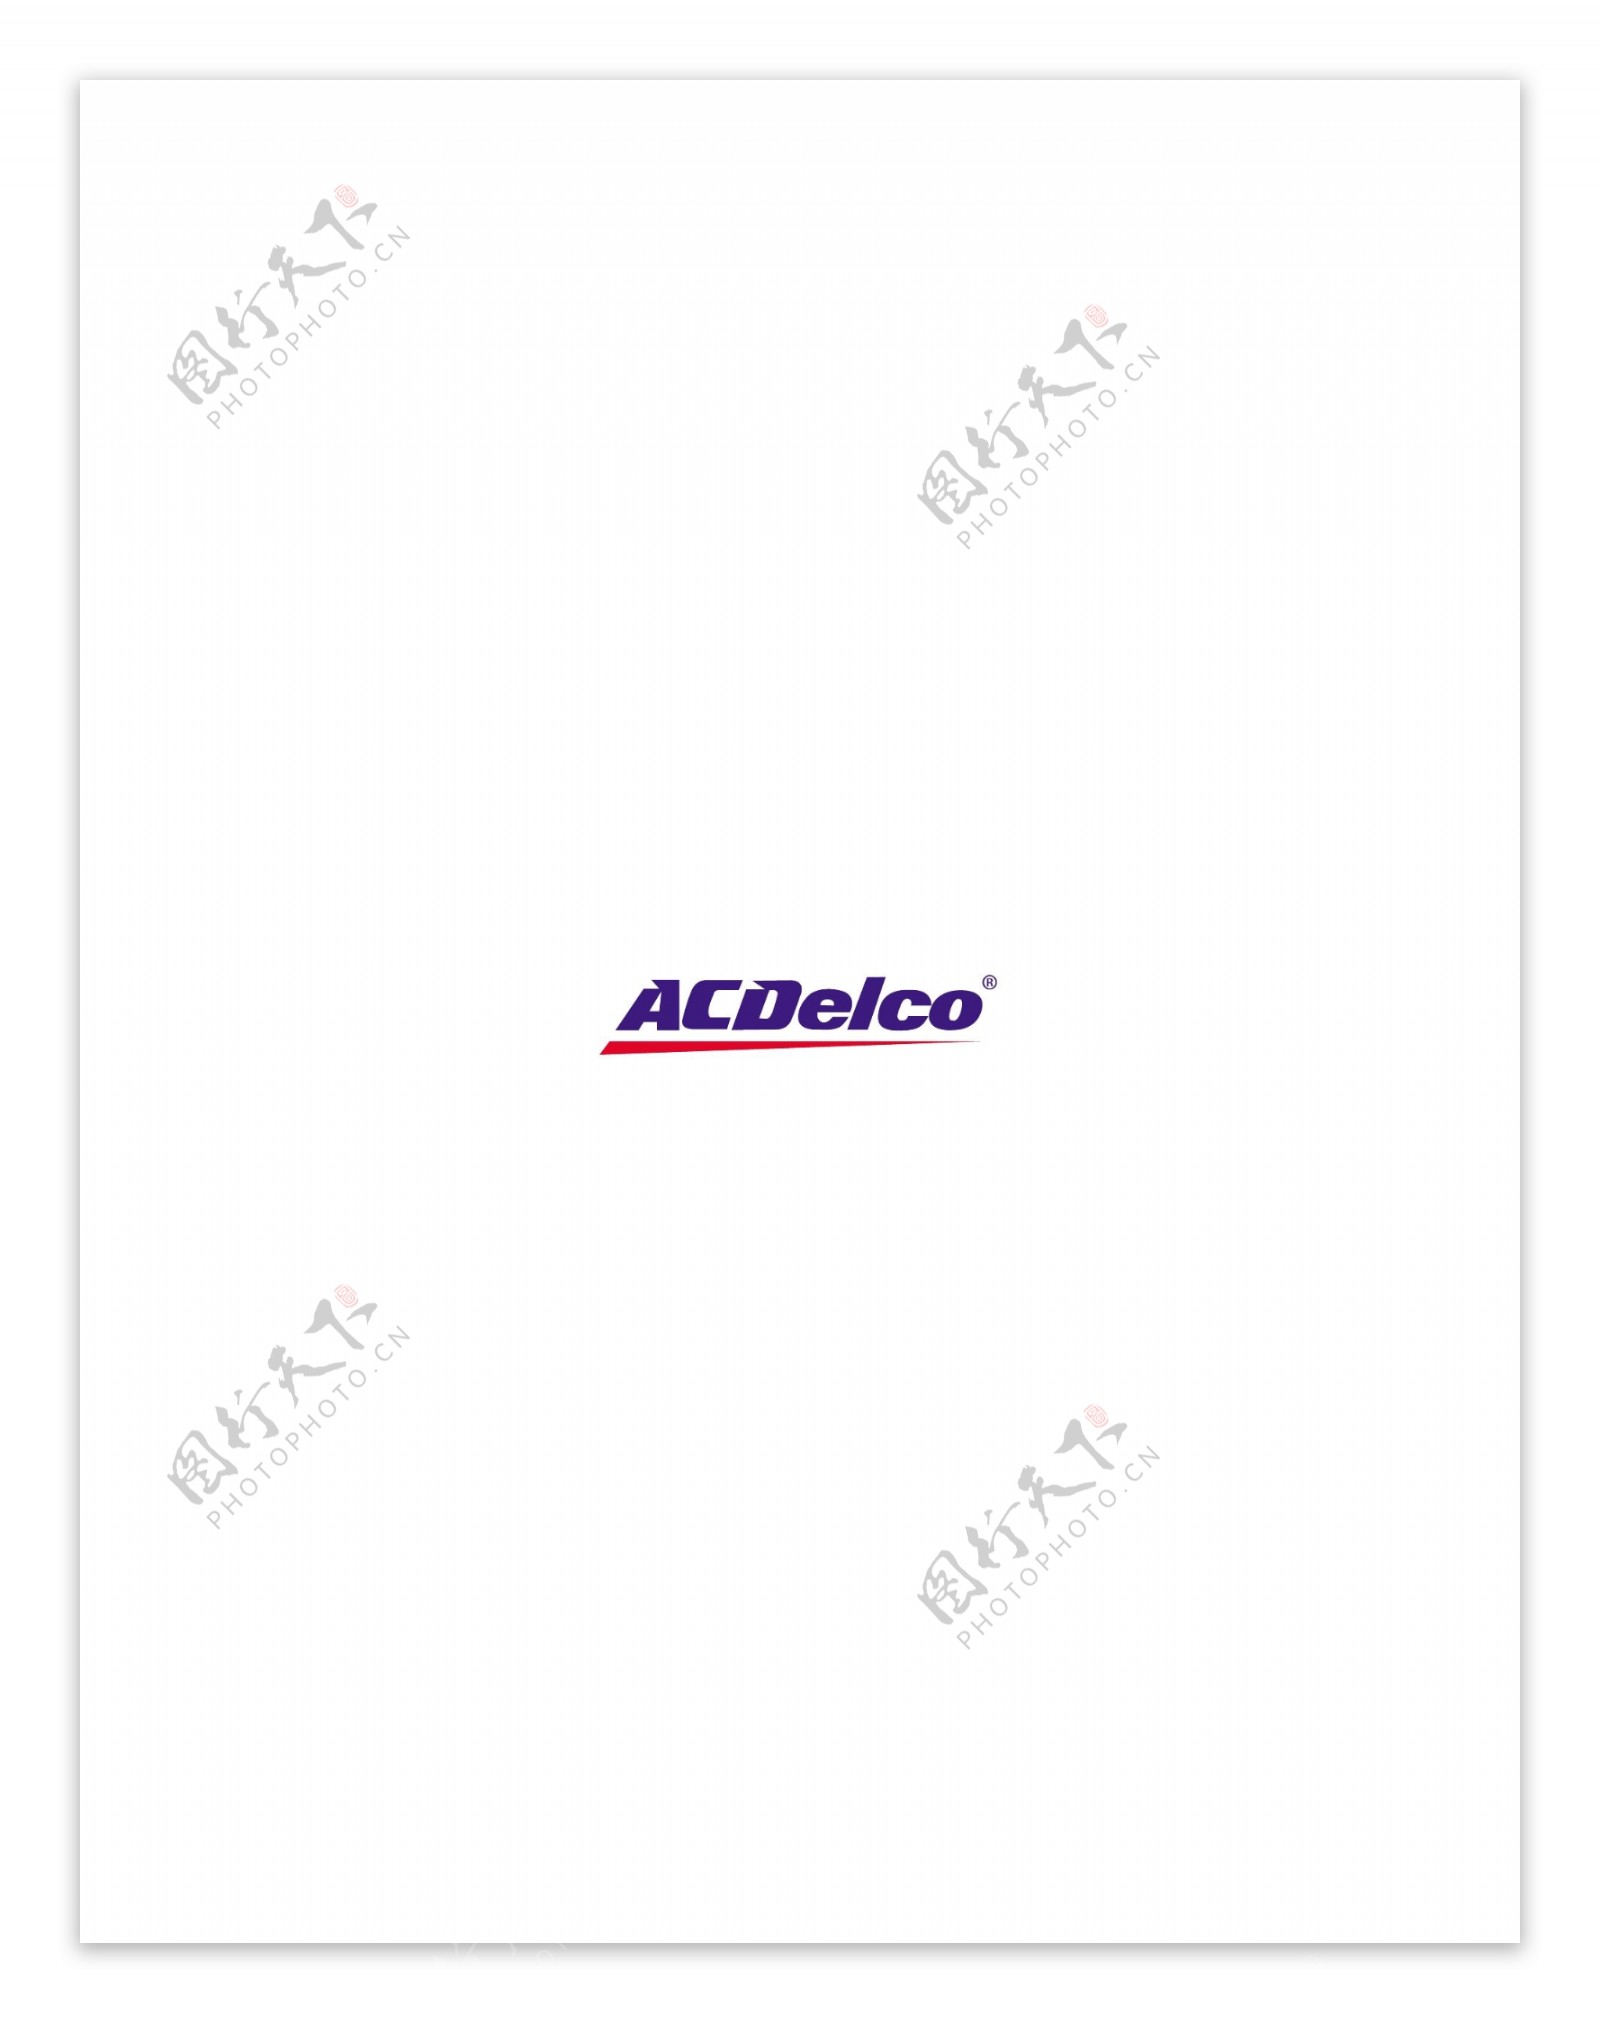 ACDelcologo设计欣赏ACDelco汽车标志大全下载标志设计欣赏